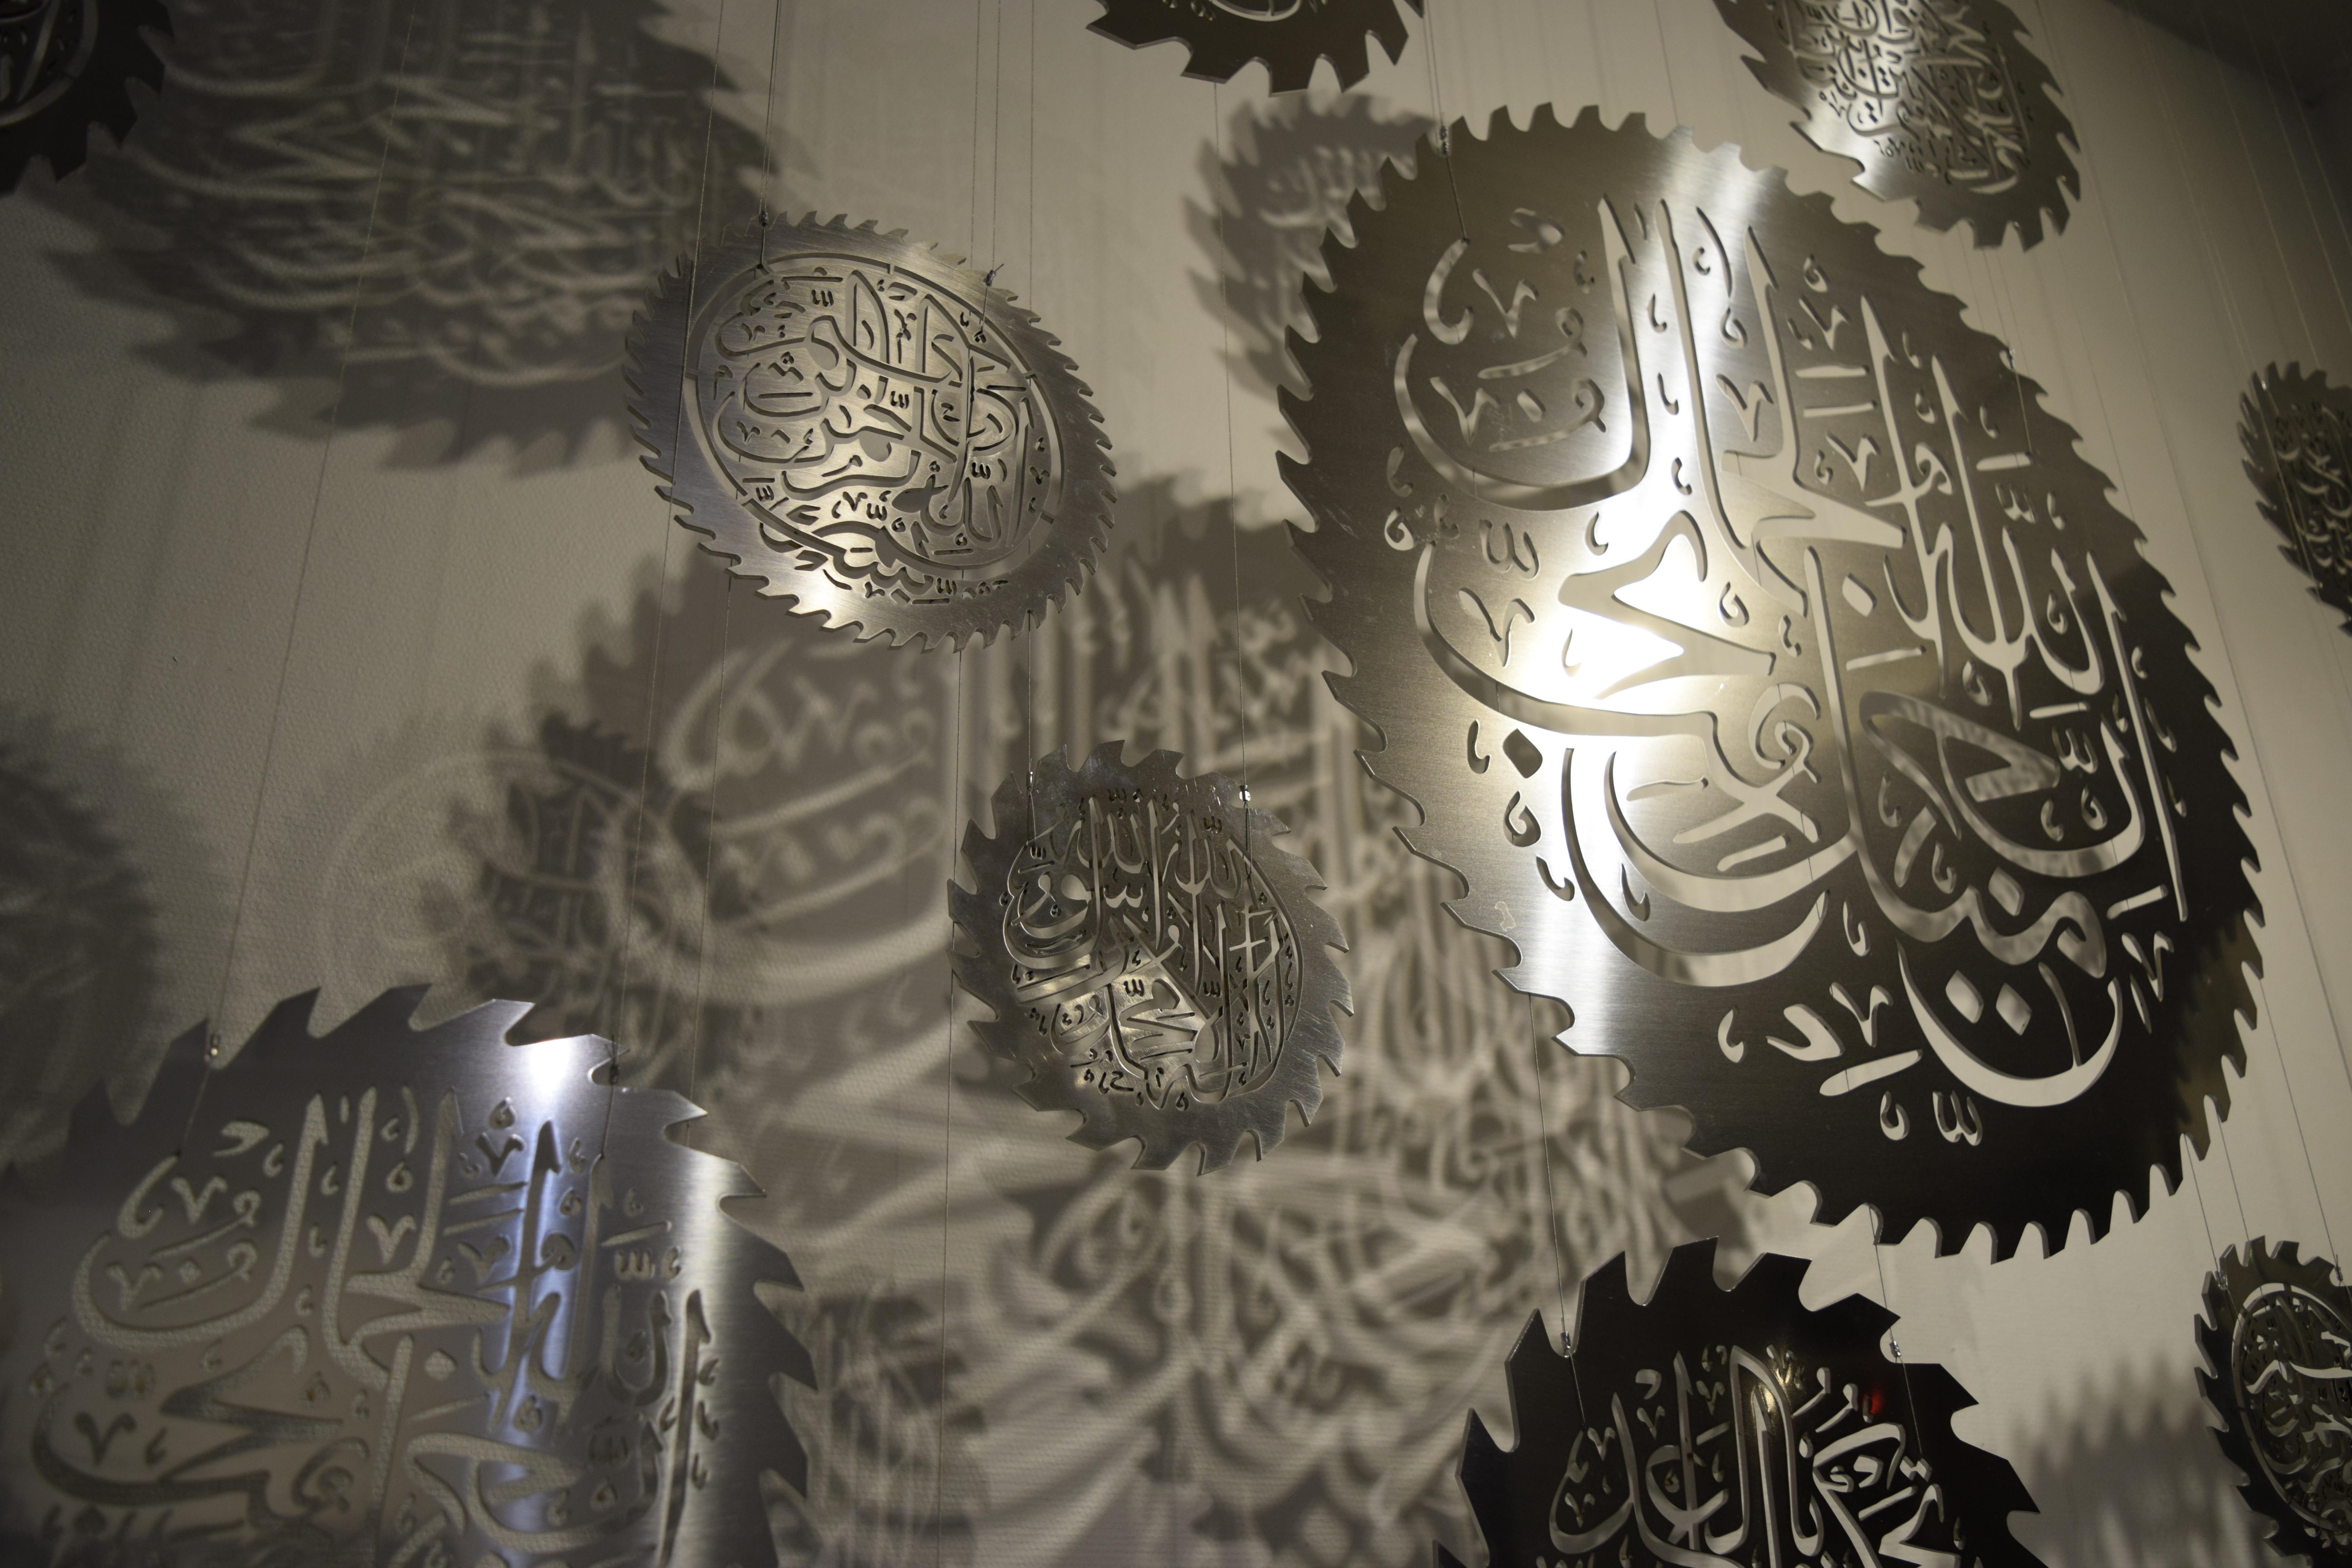 New works of Mounir Fatmi: The Machinery